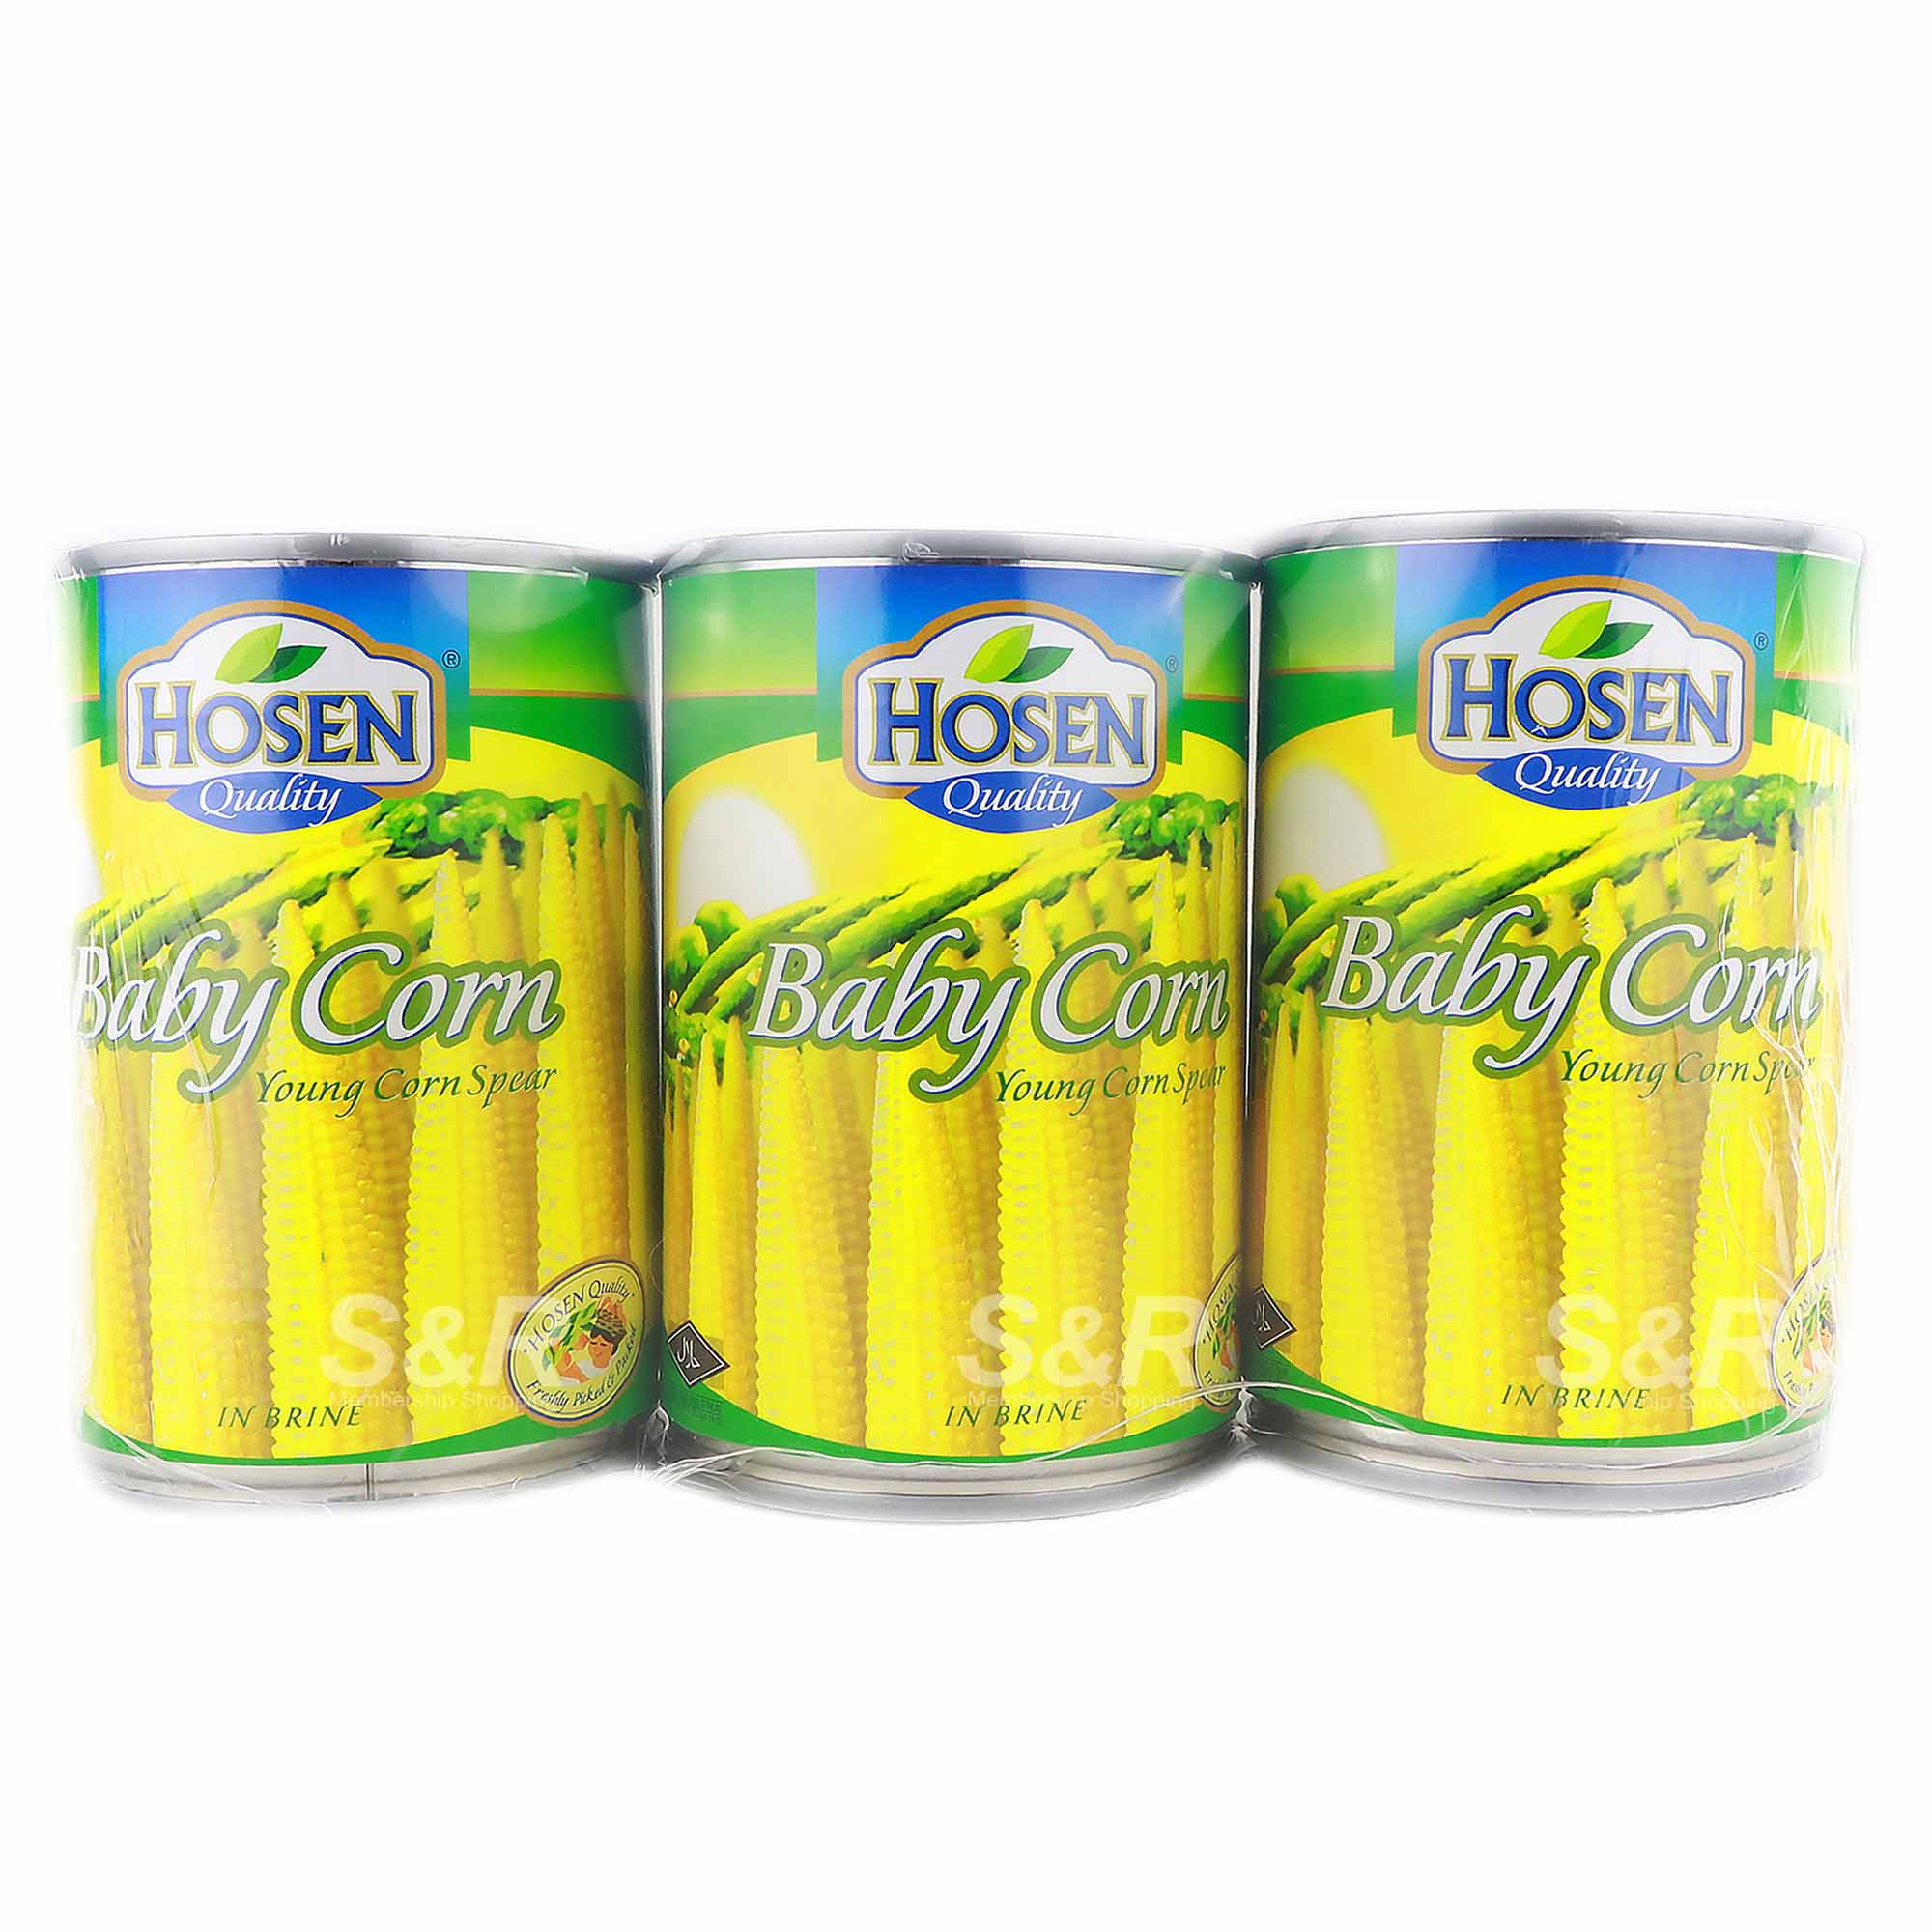 Hosen Quality Baby Corn Spear in Brine 3 cans